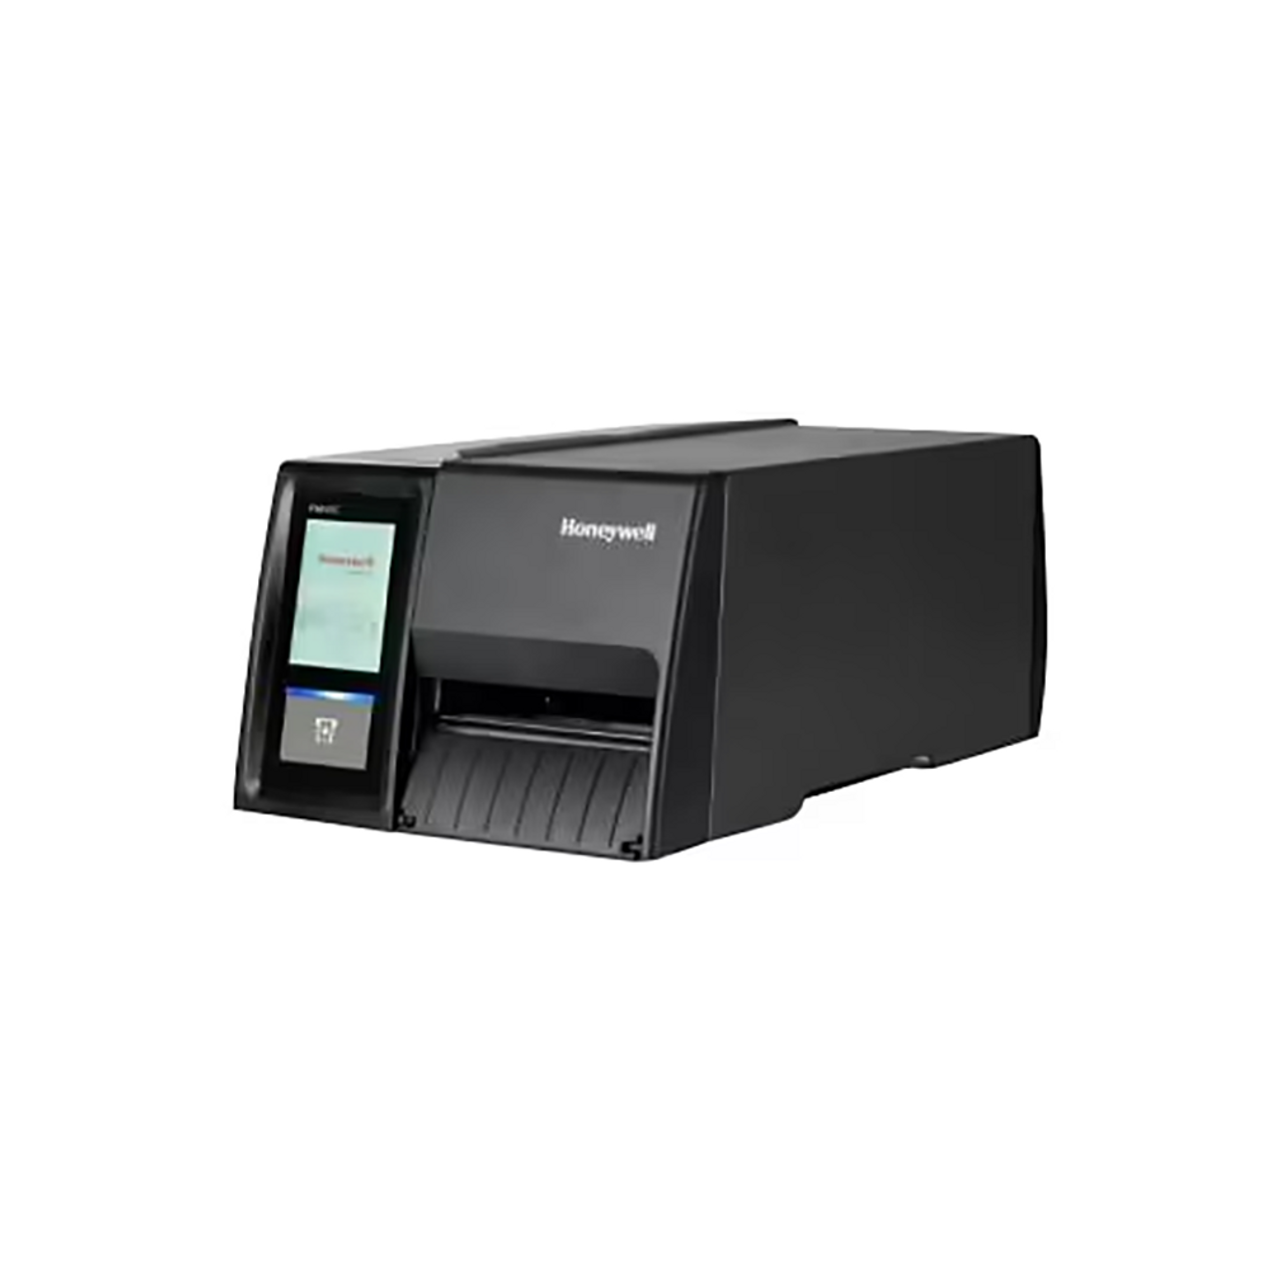 Honeywell PM45A Mid-Range Industrial Printer